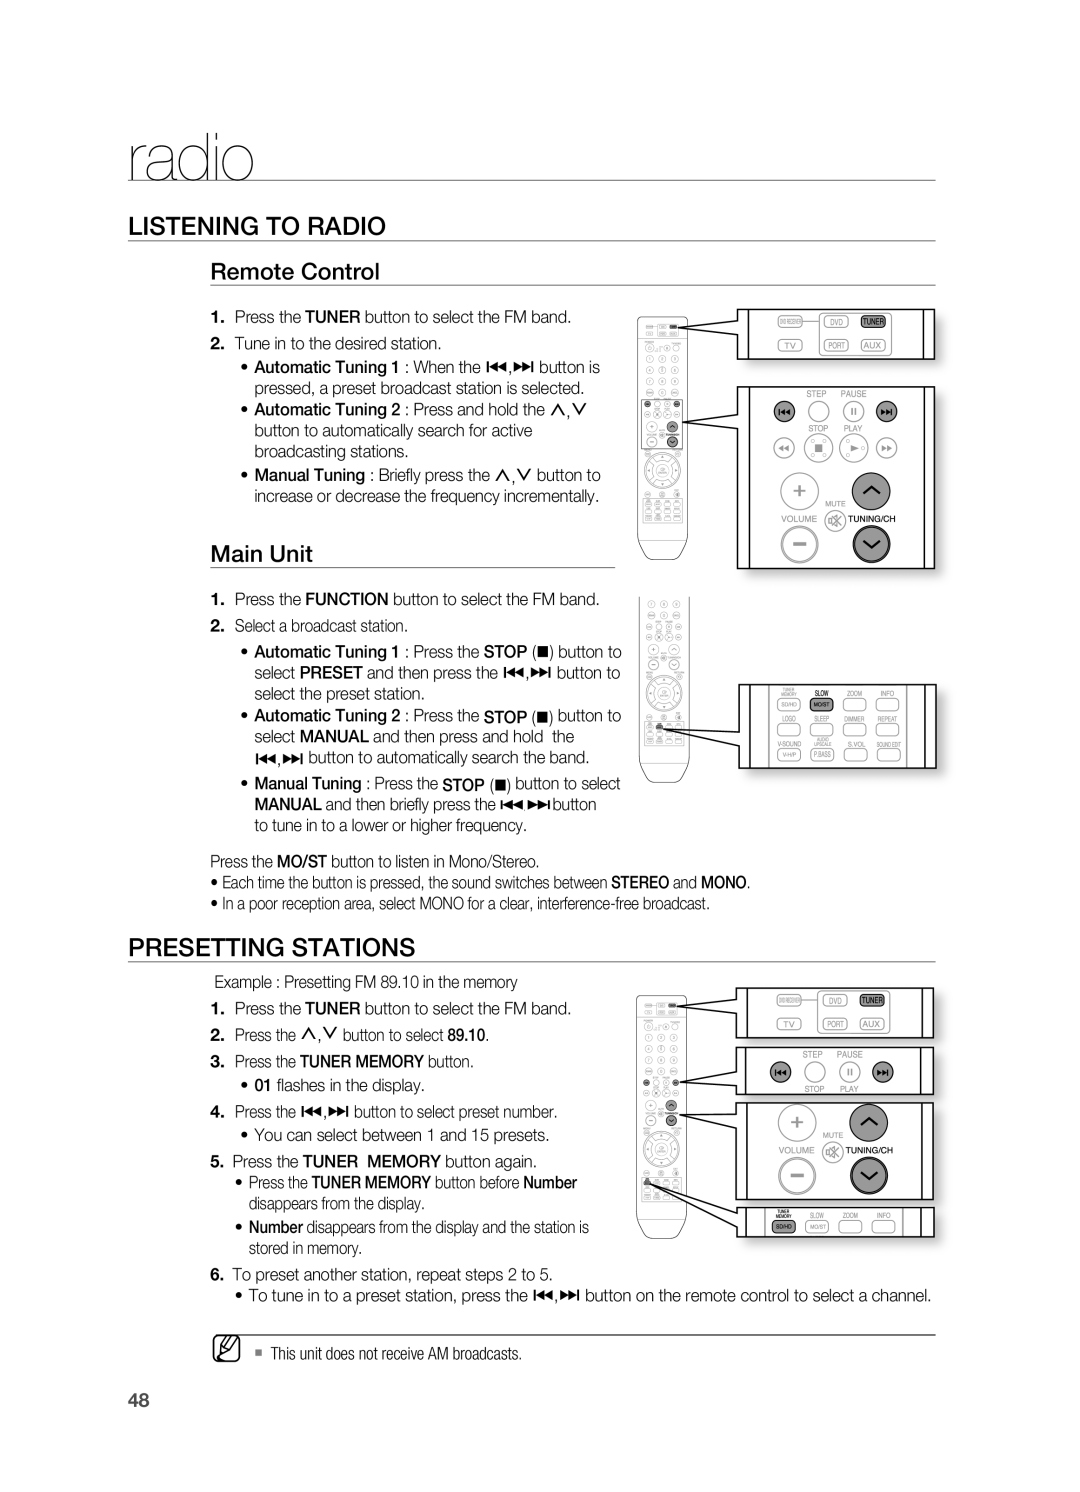 Samsung HT-X710 user manual radio, lISTENING TO rADIO, PrESETTING STATIONS, remote Control, Main Unit 